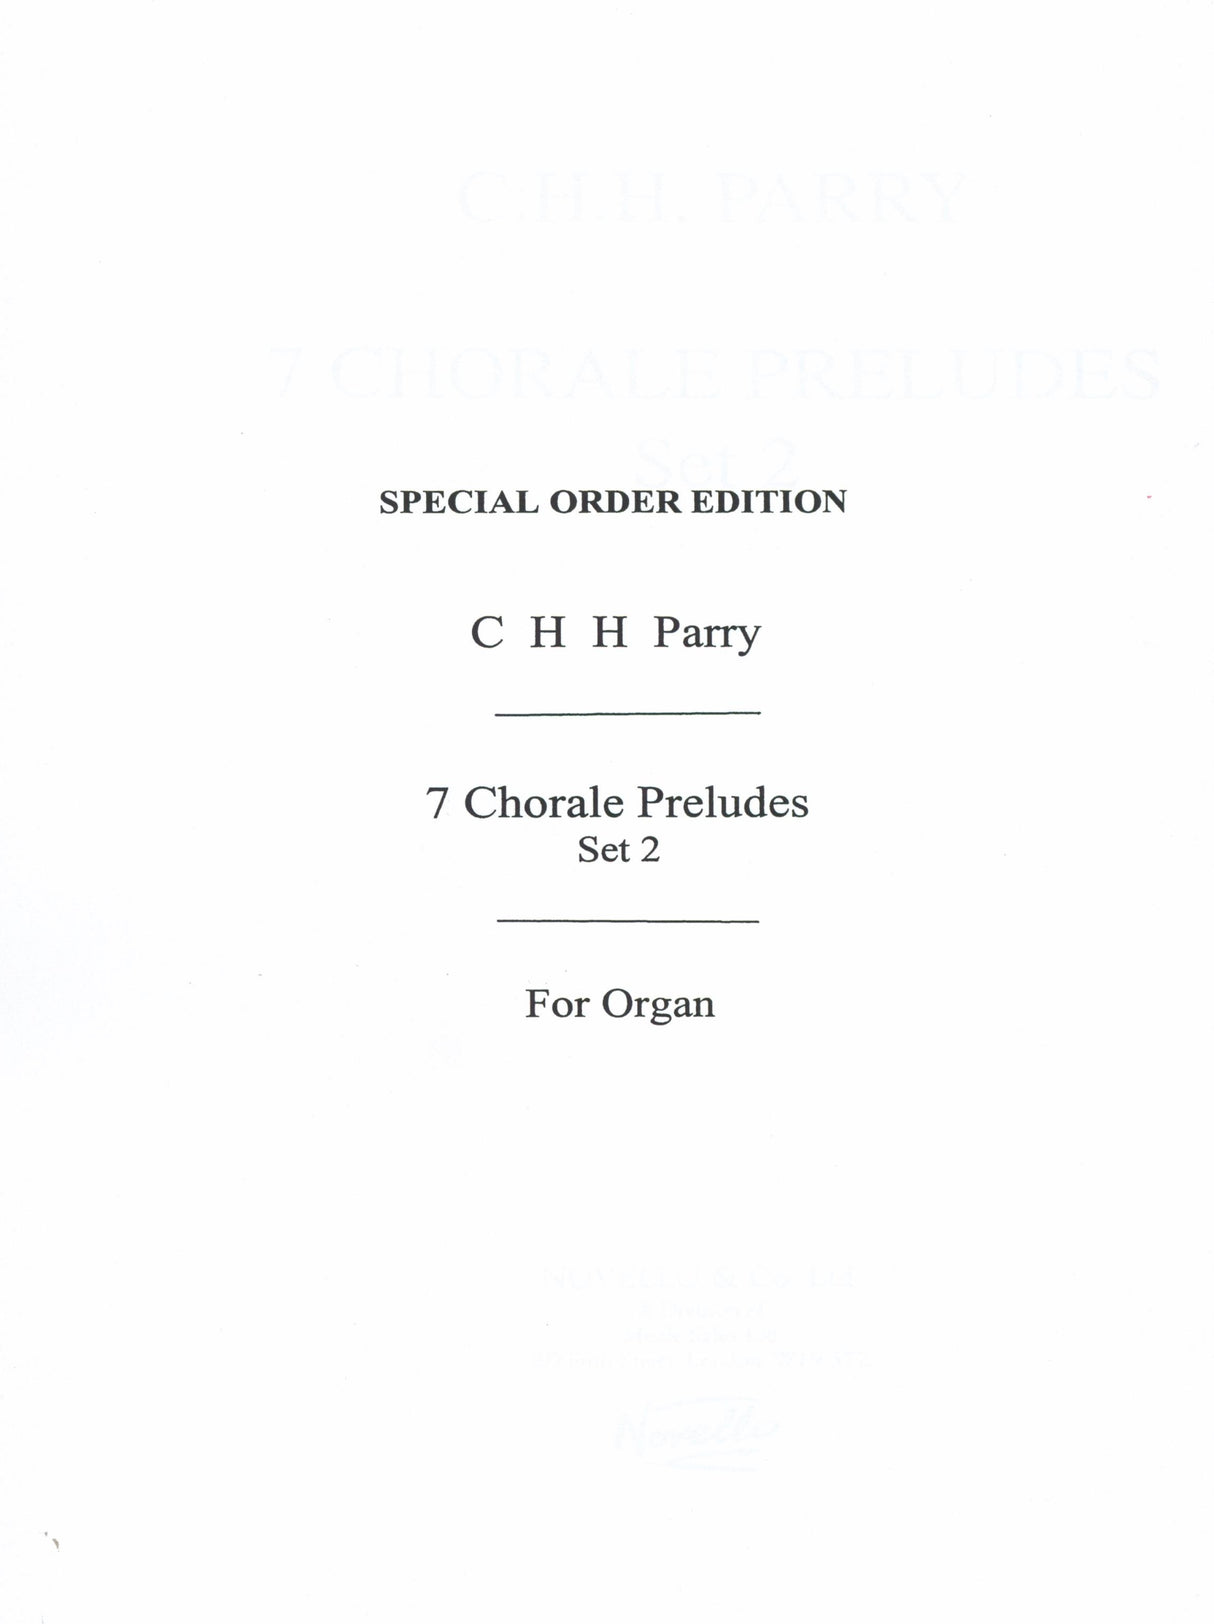 Parry: 7 Chorale Preludes - Set 2